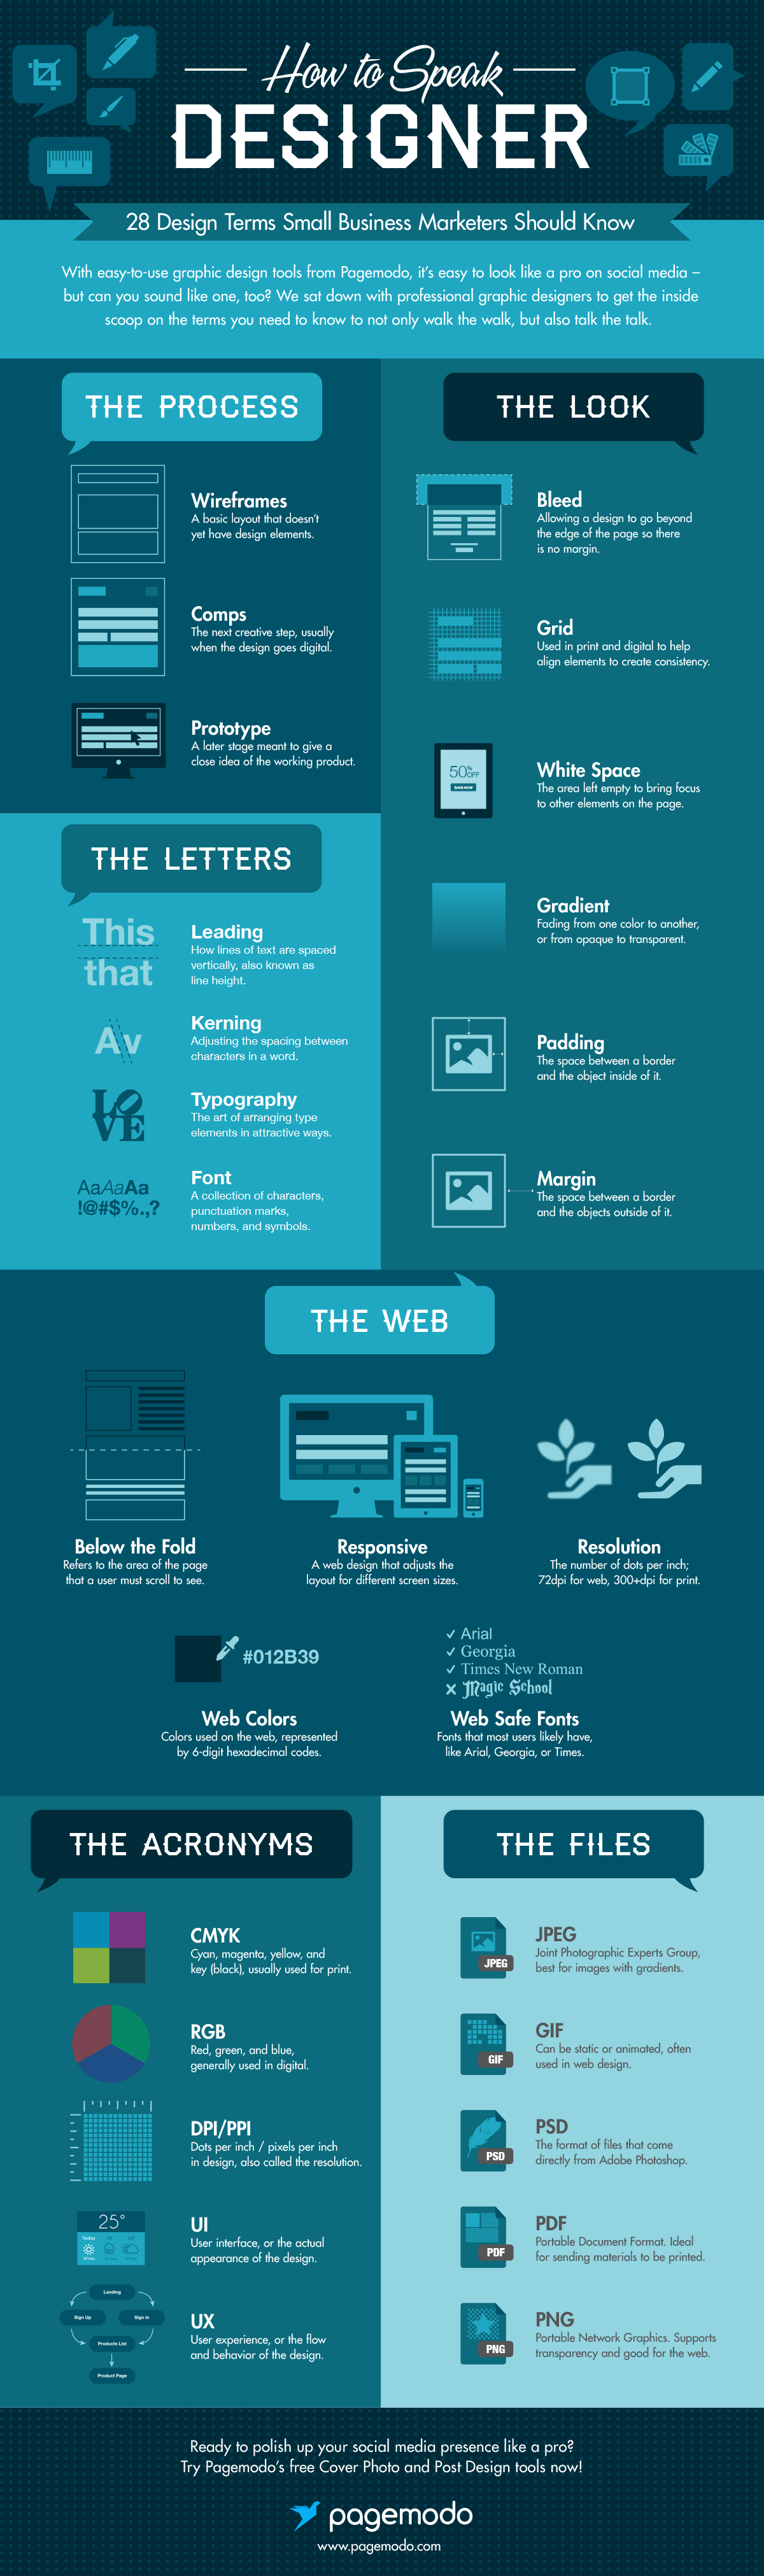 how-to-speak-designer-infographic